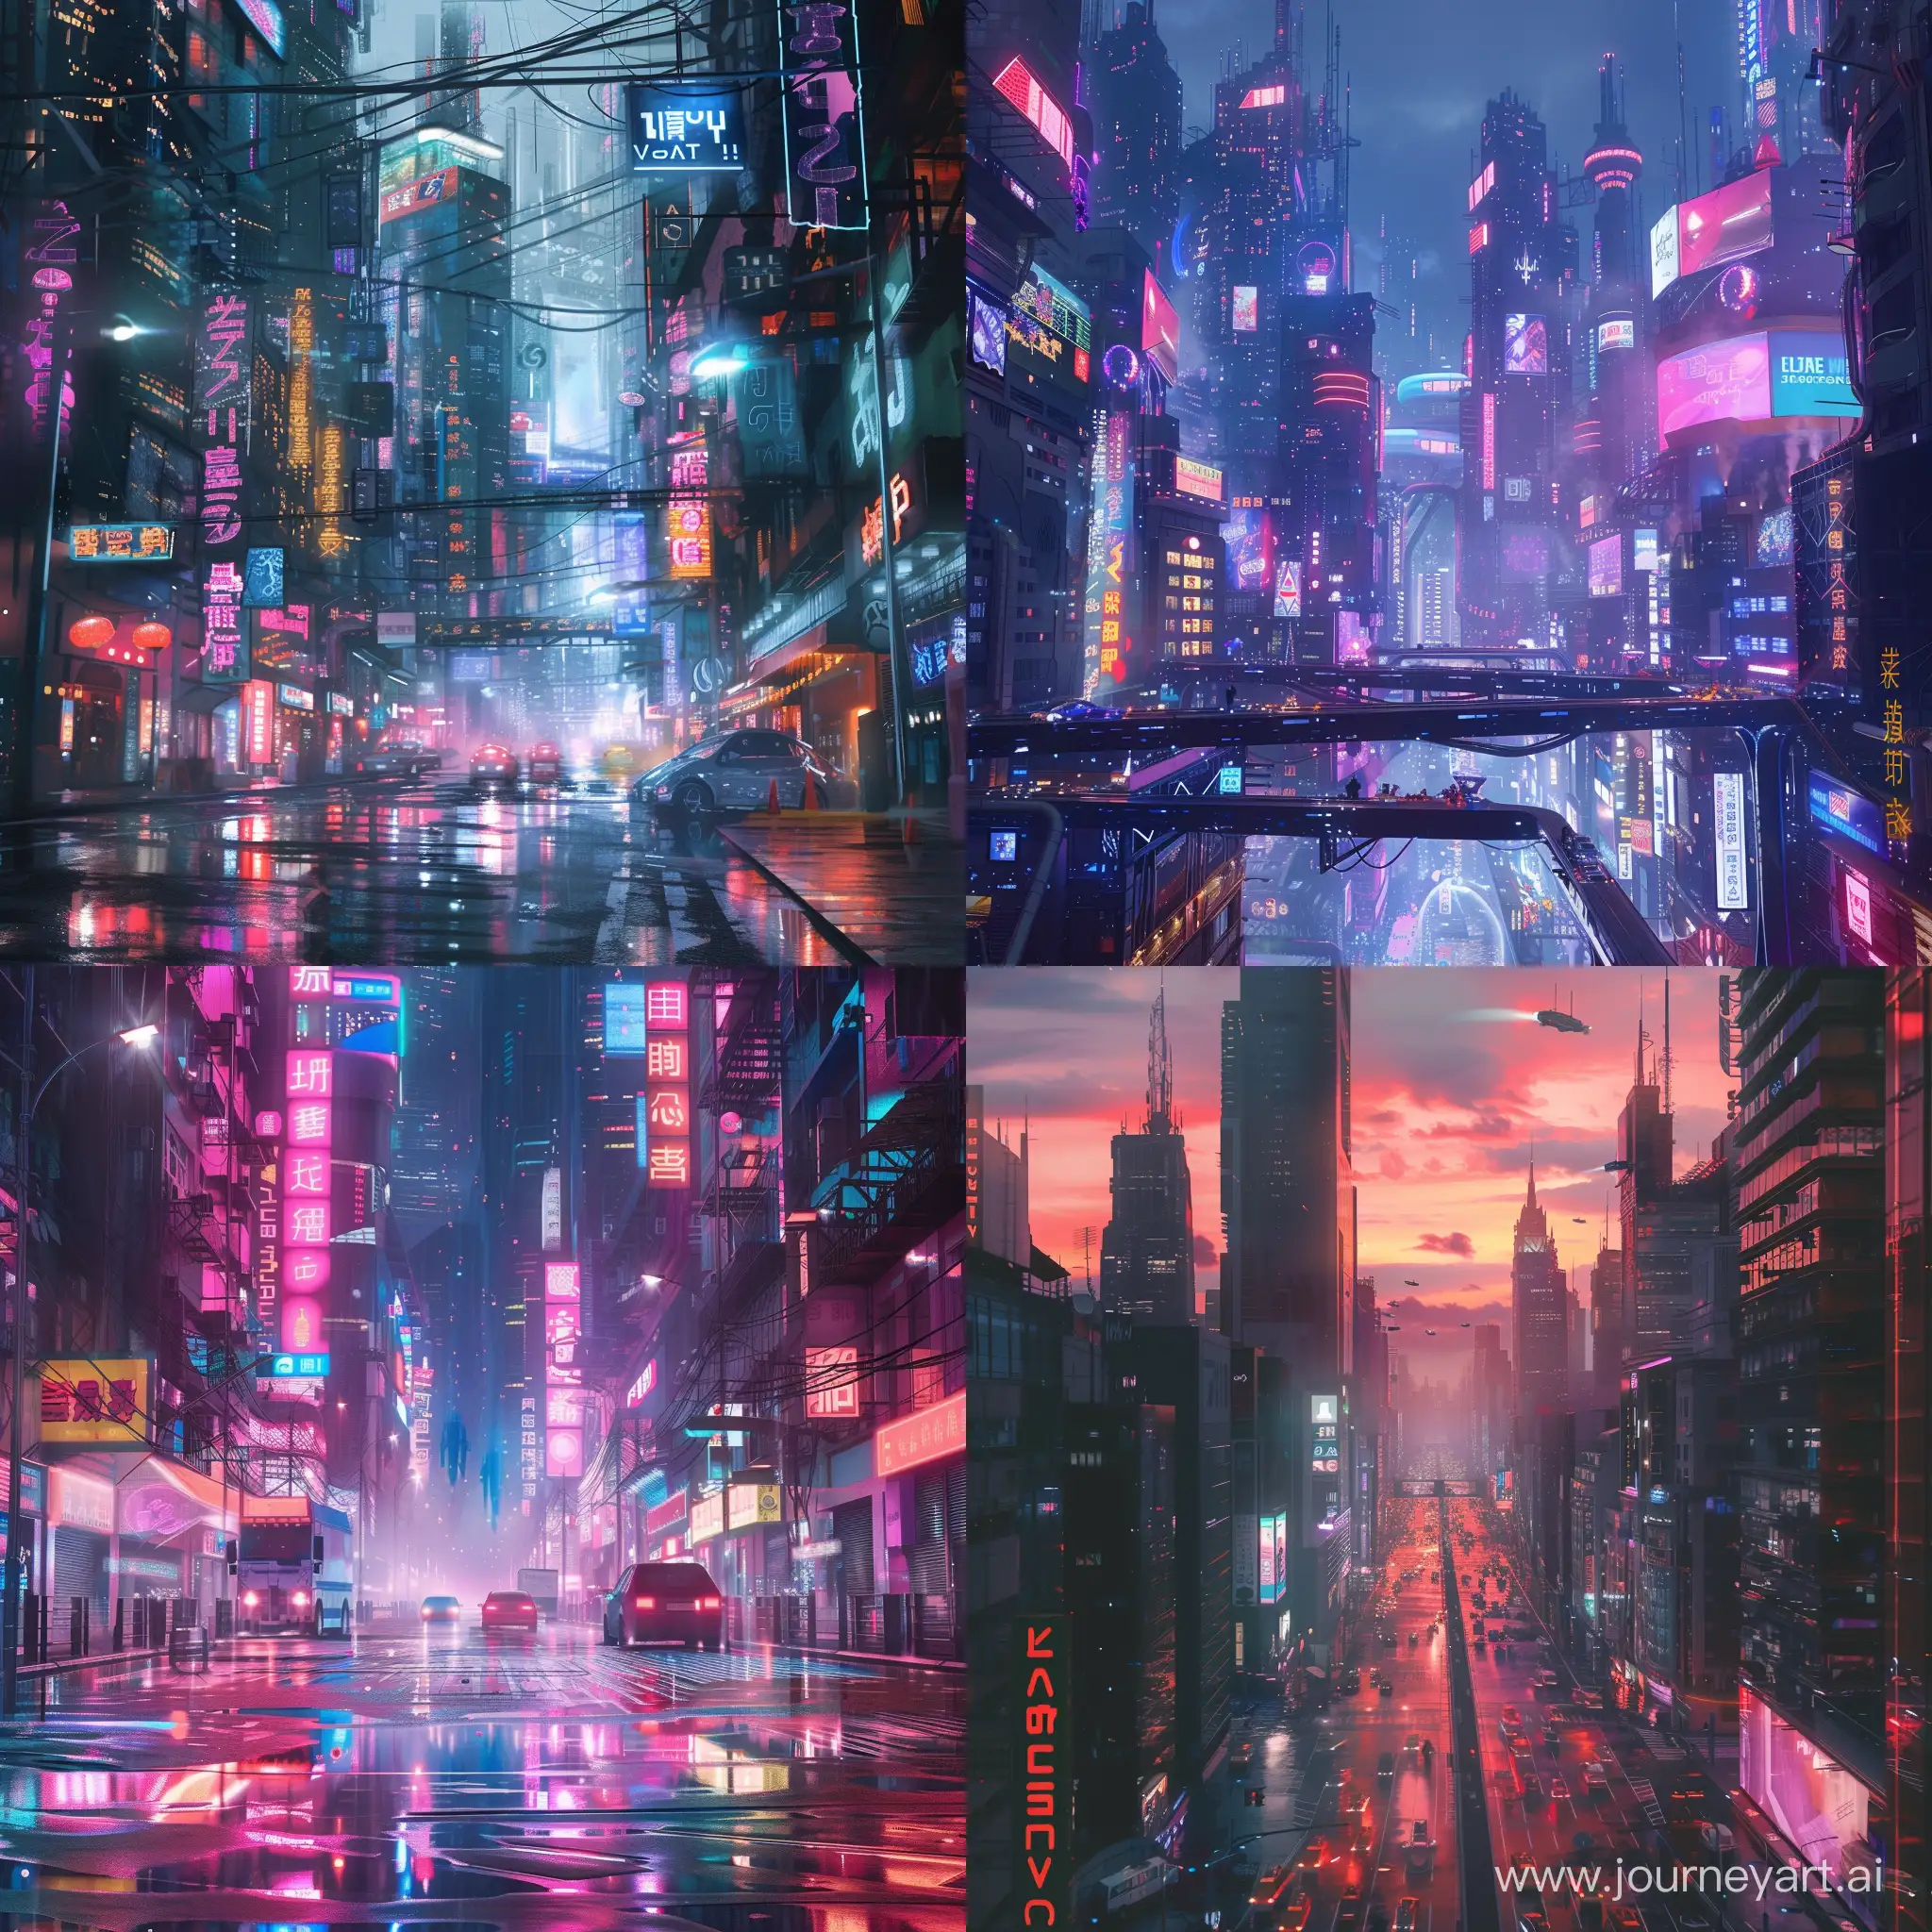 Futuristic-Cyberpunk-Cityscape-with-Stunning-Architecture